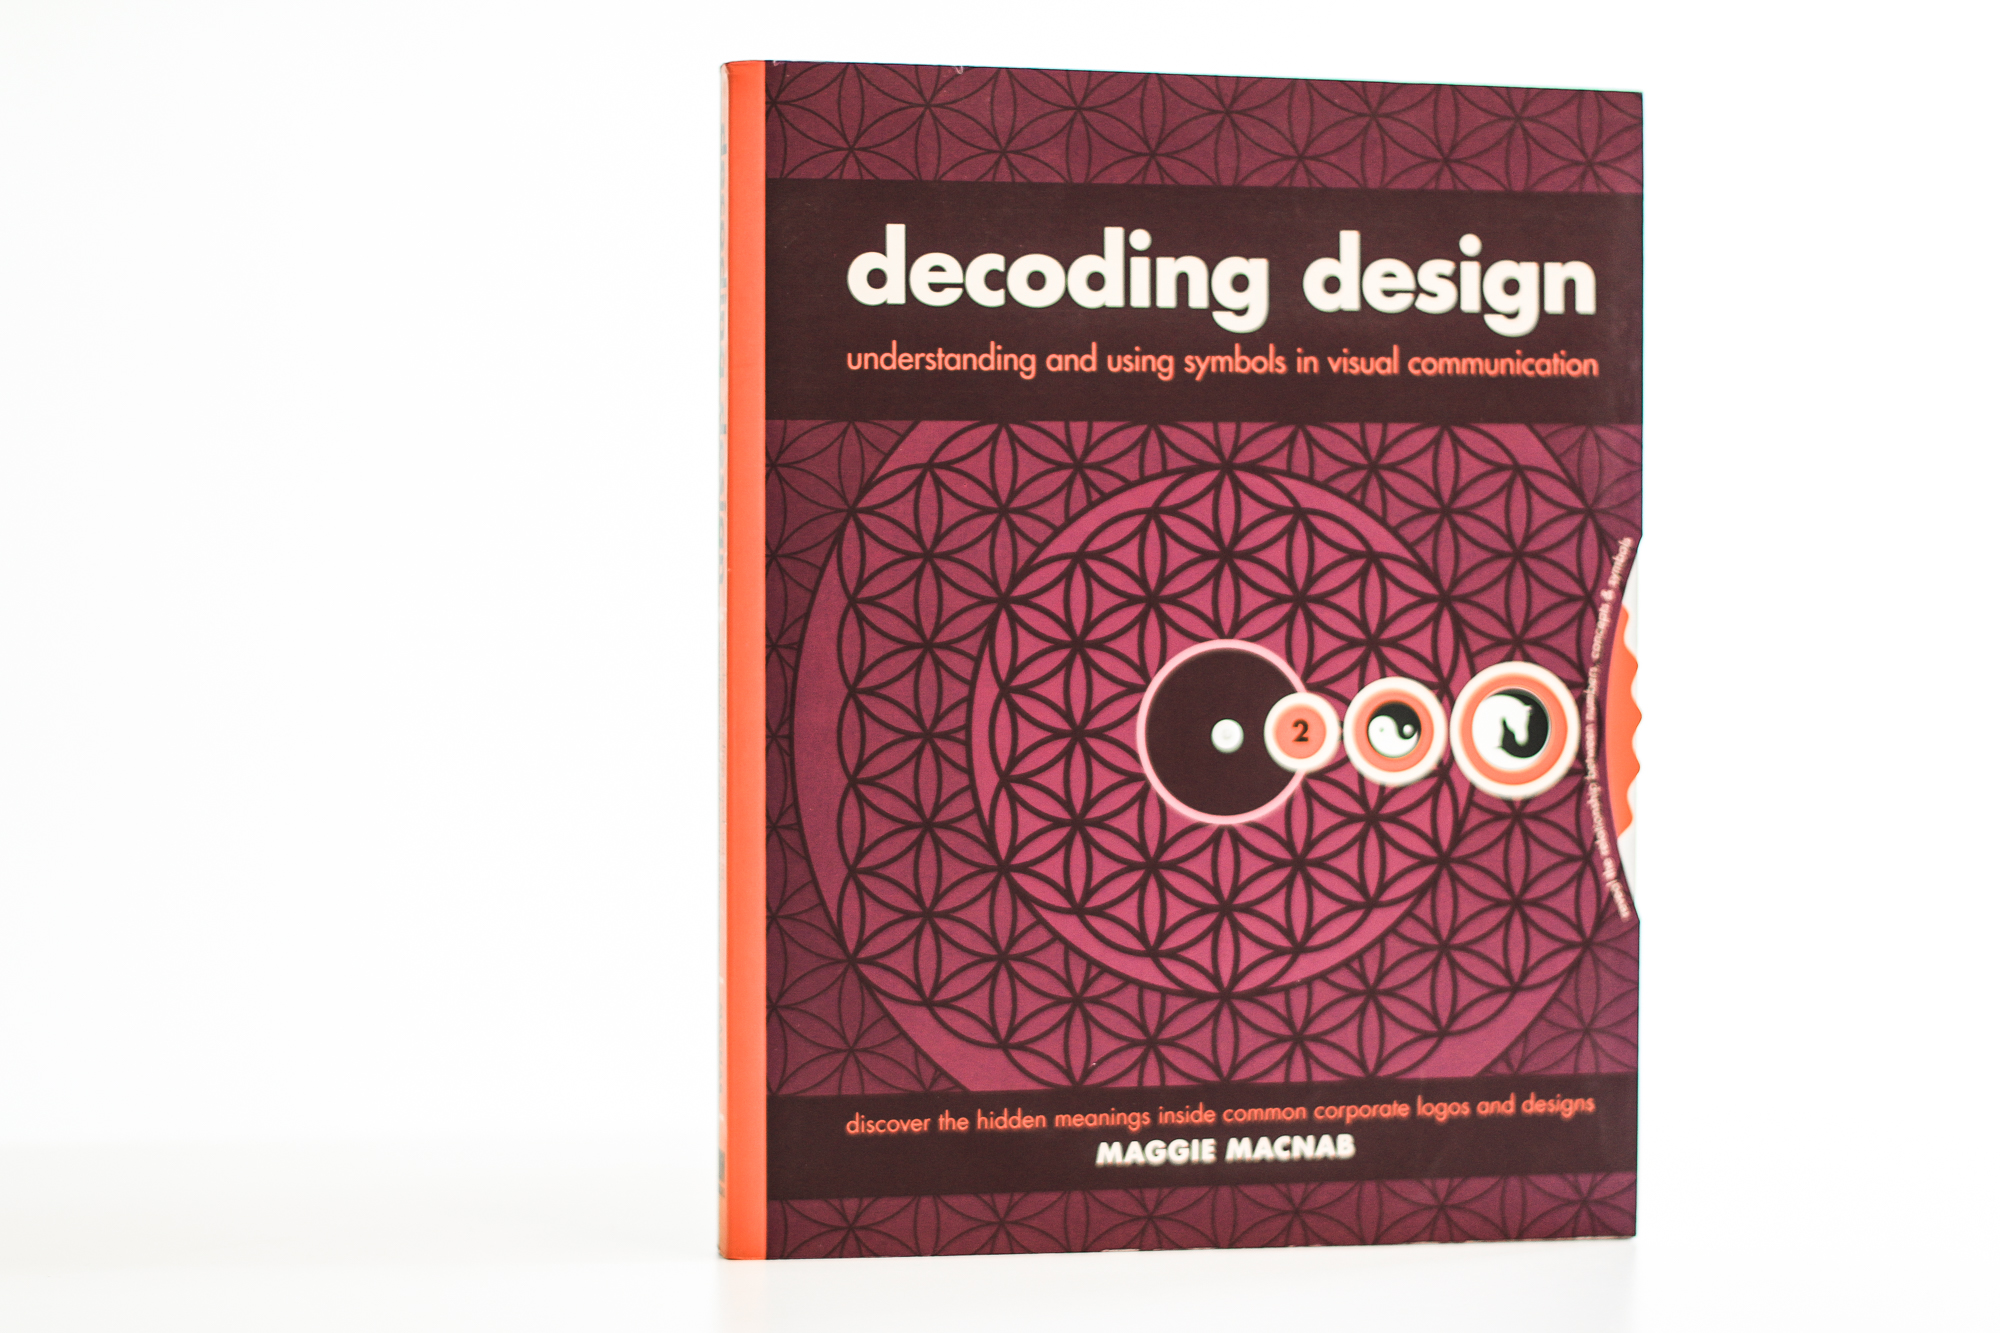 Decoding Design, by Maggie Macnab